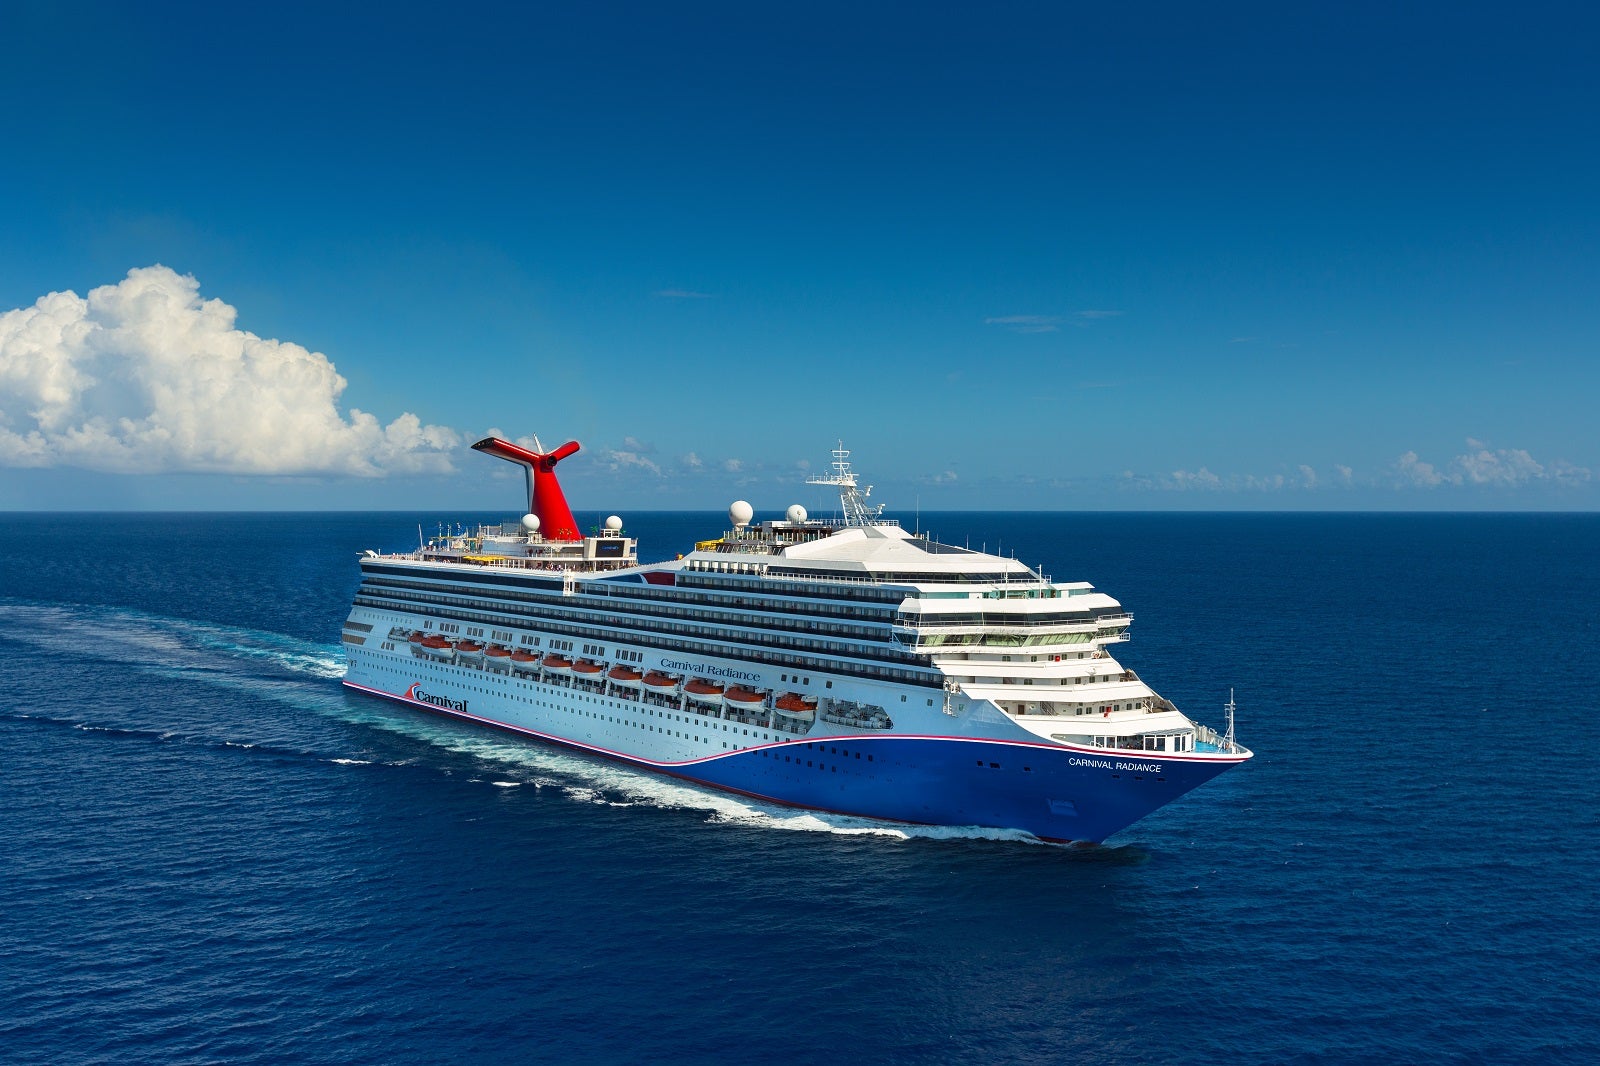 Carnival-Radiance-cruise-ship